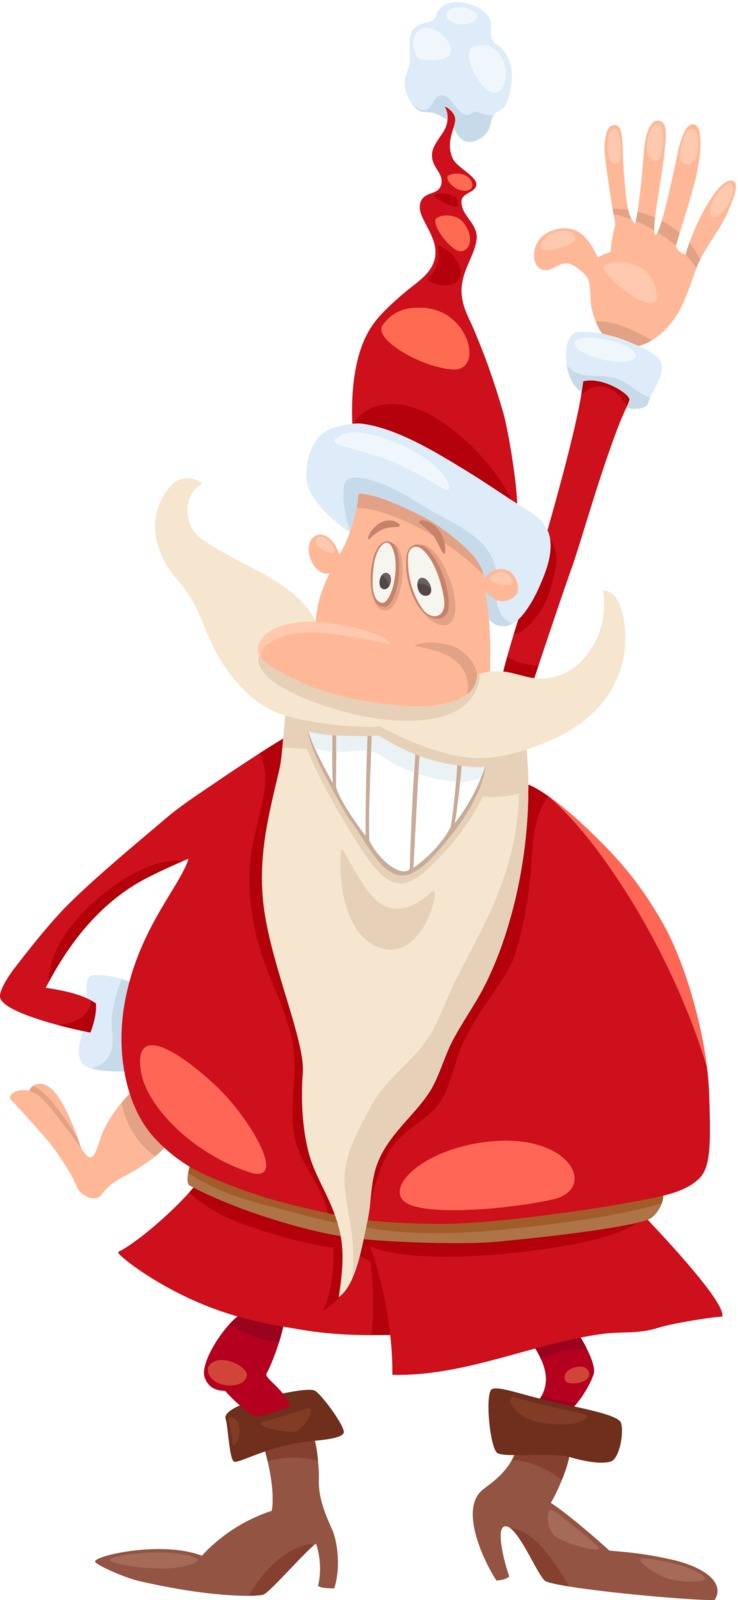 Cartoon Illustration of Funny Santa Claus or Papa Noel